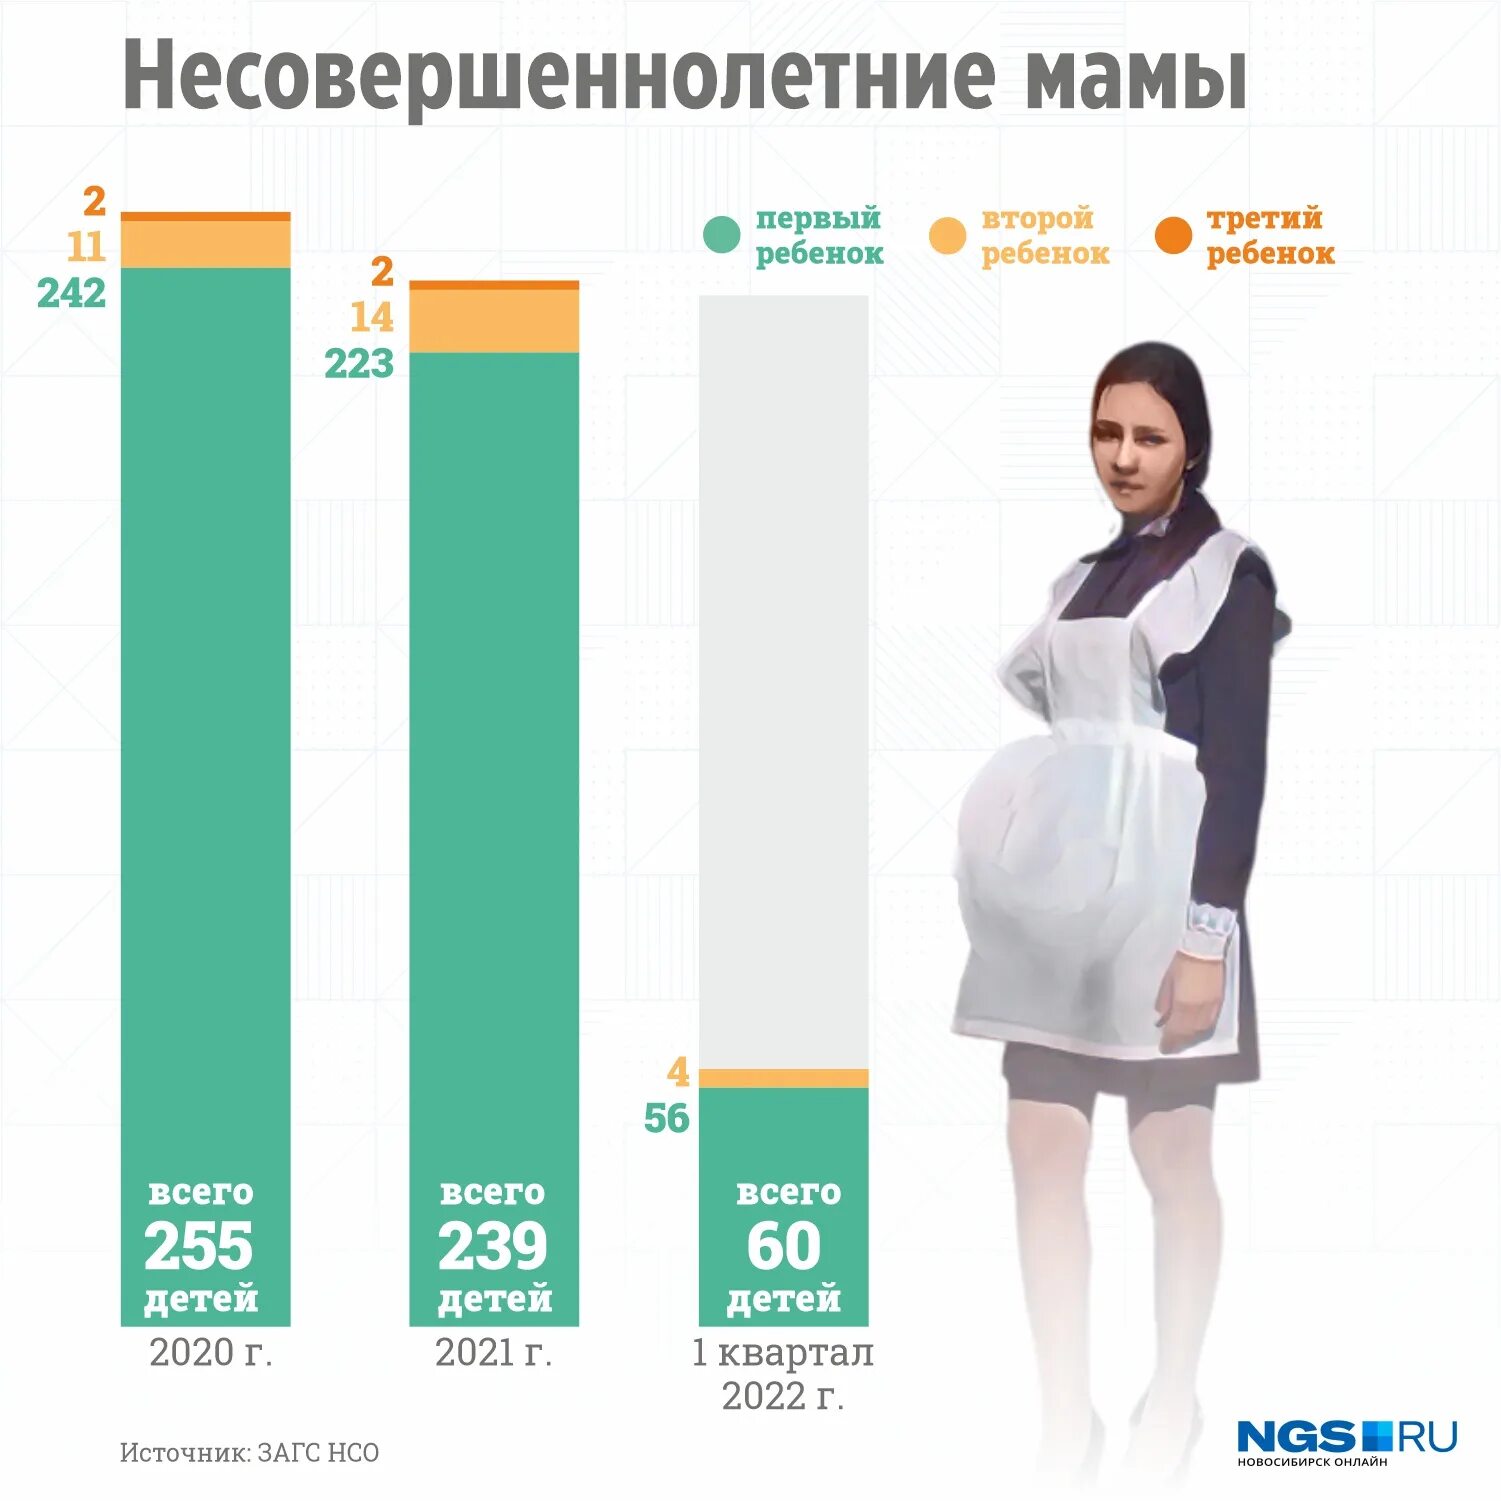 Статистика несовершеннолетних матерей. Инфографика по годам. Несовершеннолетние матери. Несовершеннолетние мамы статистика в России. Пособия несовершеннолетней матери